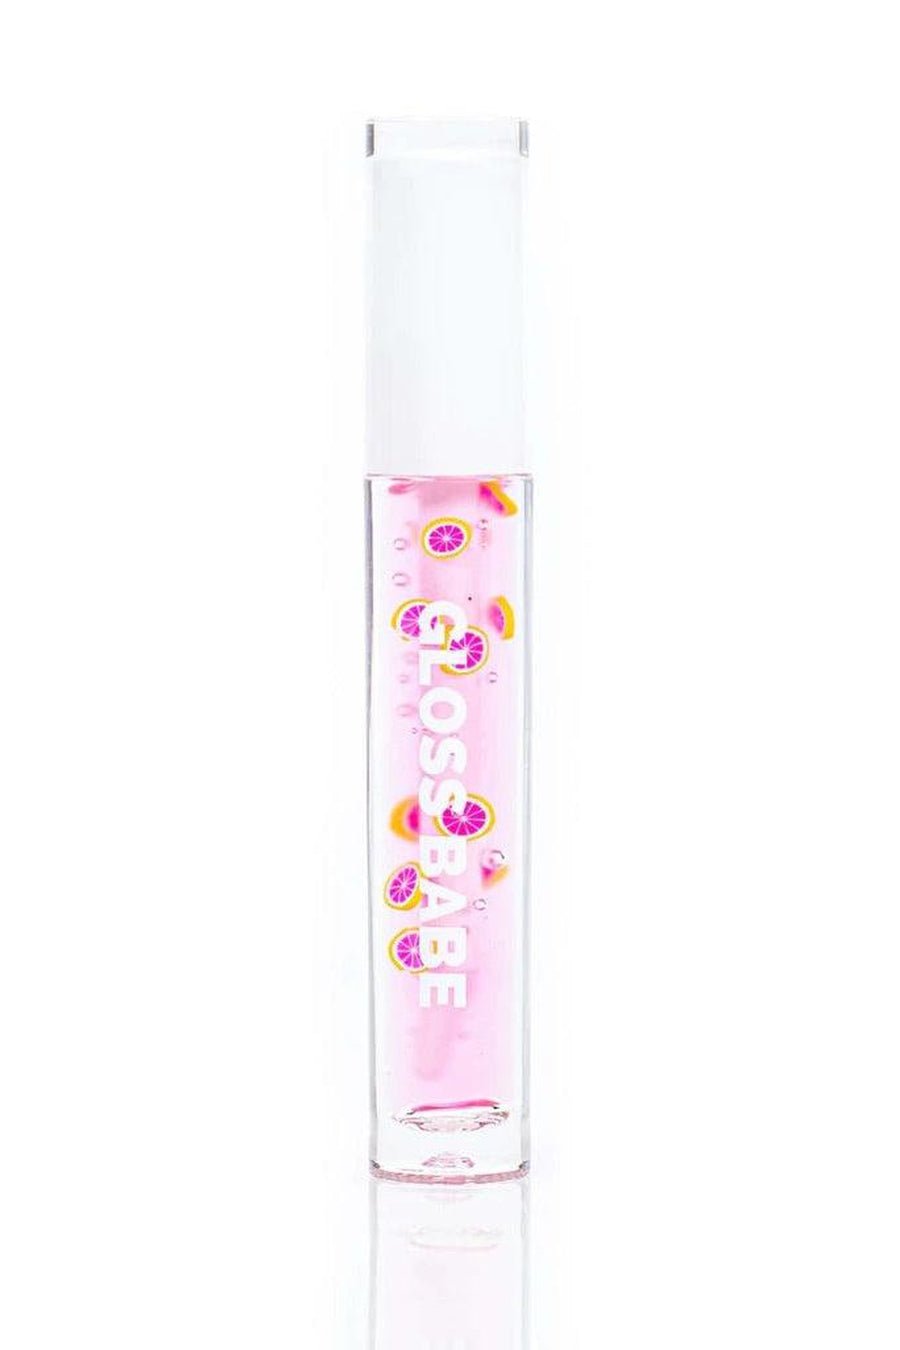 Shop Gloss Babe Pink Lemonade Lip Gloss - Premium Lip Gloss from Gloss Babe Online now at Spoiled Brat 